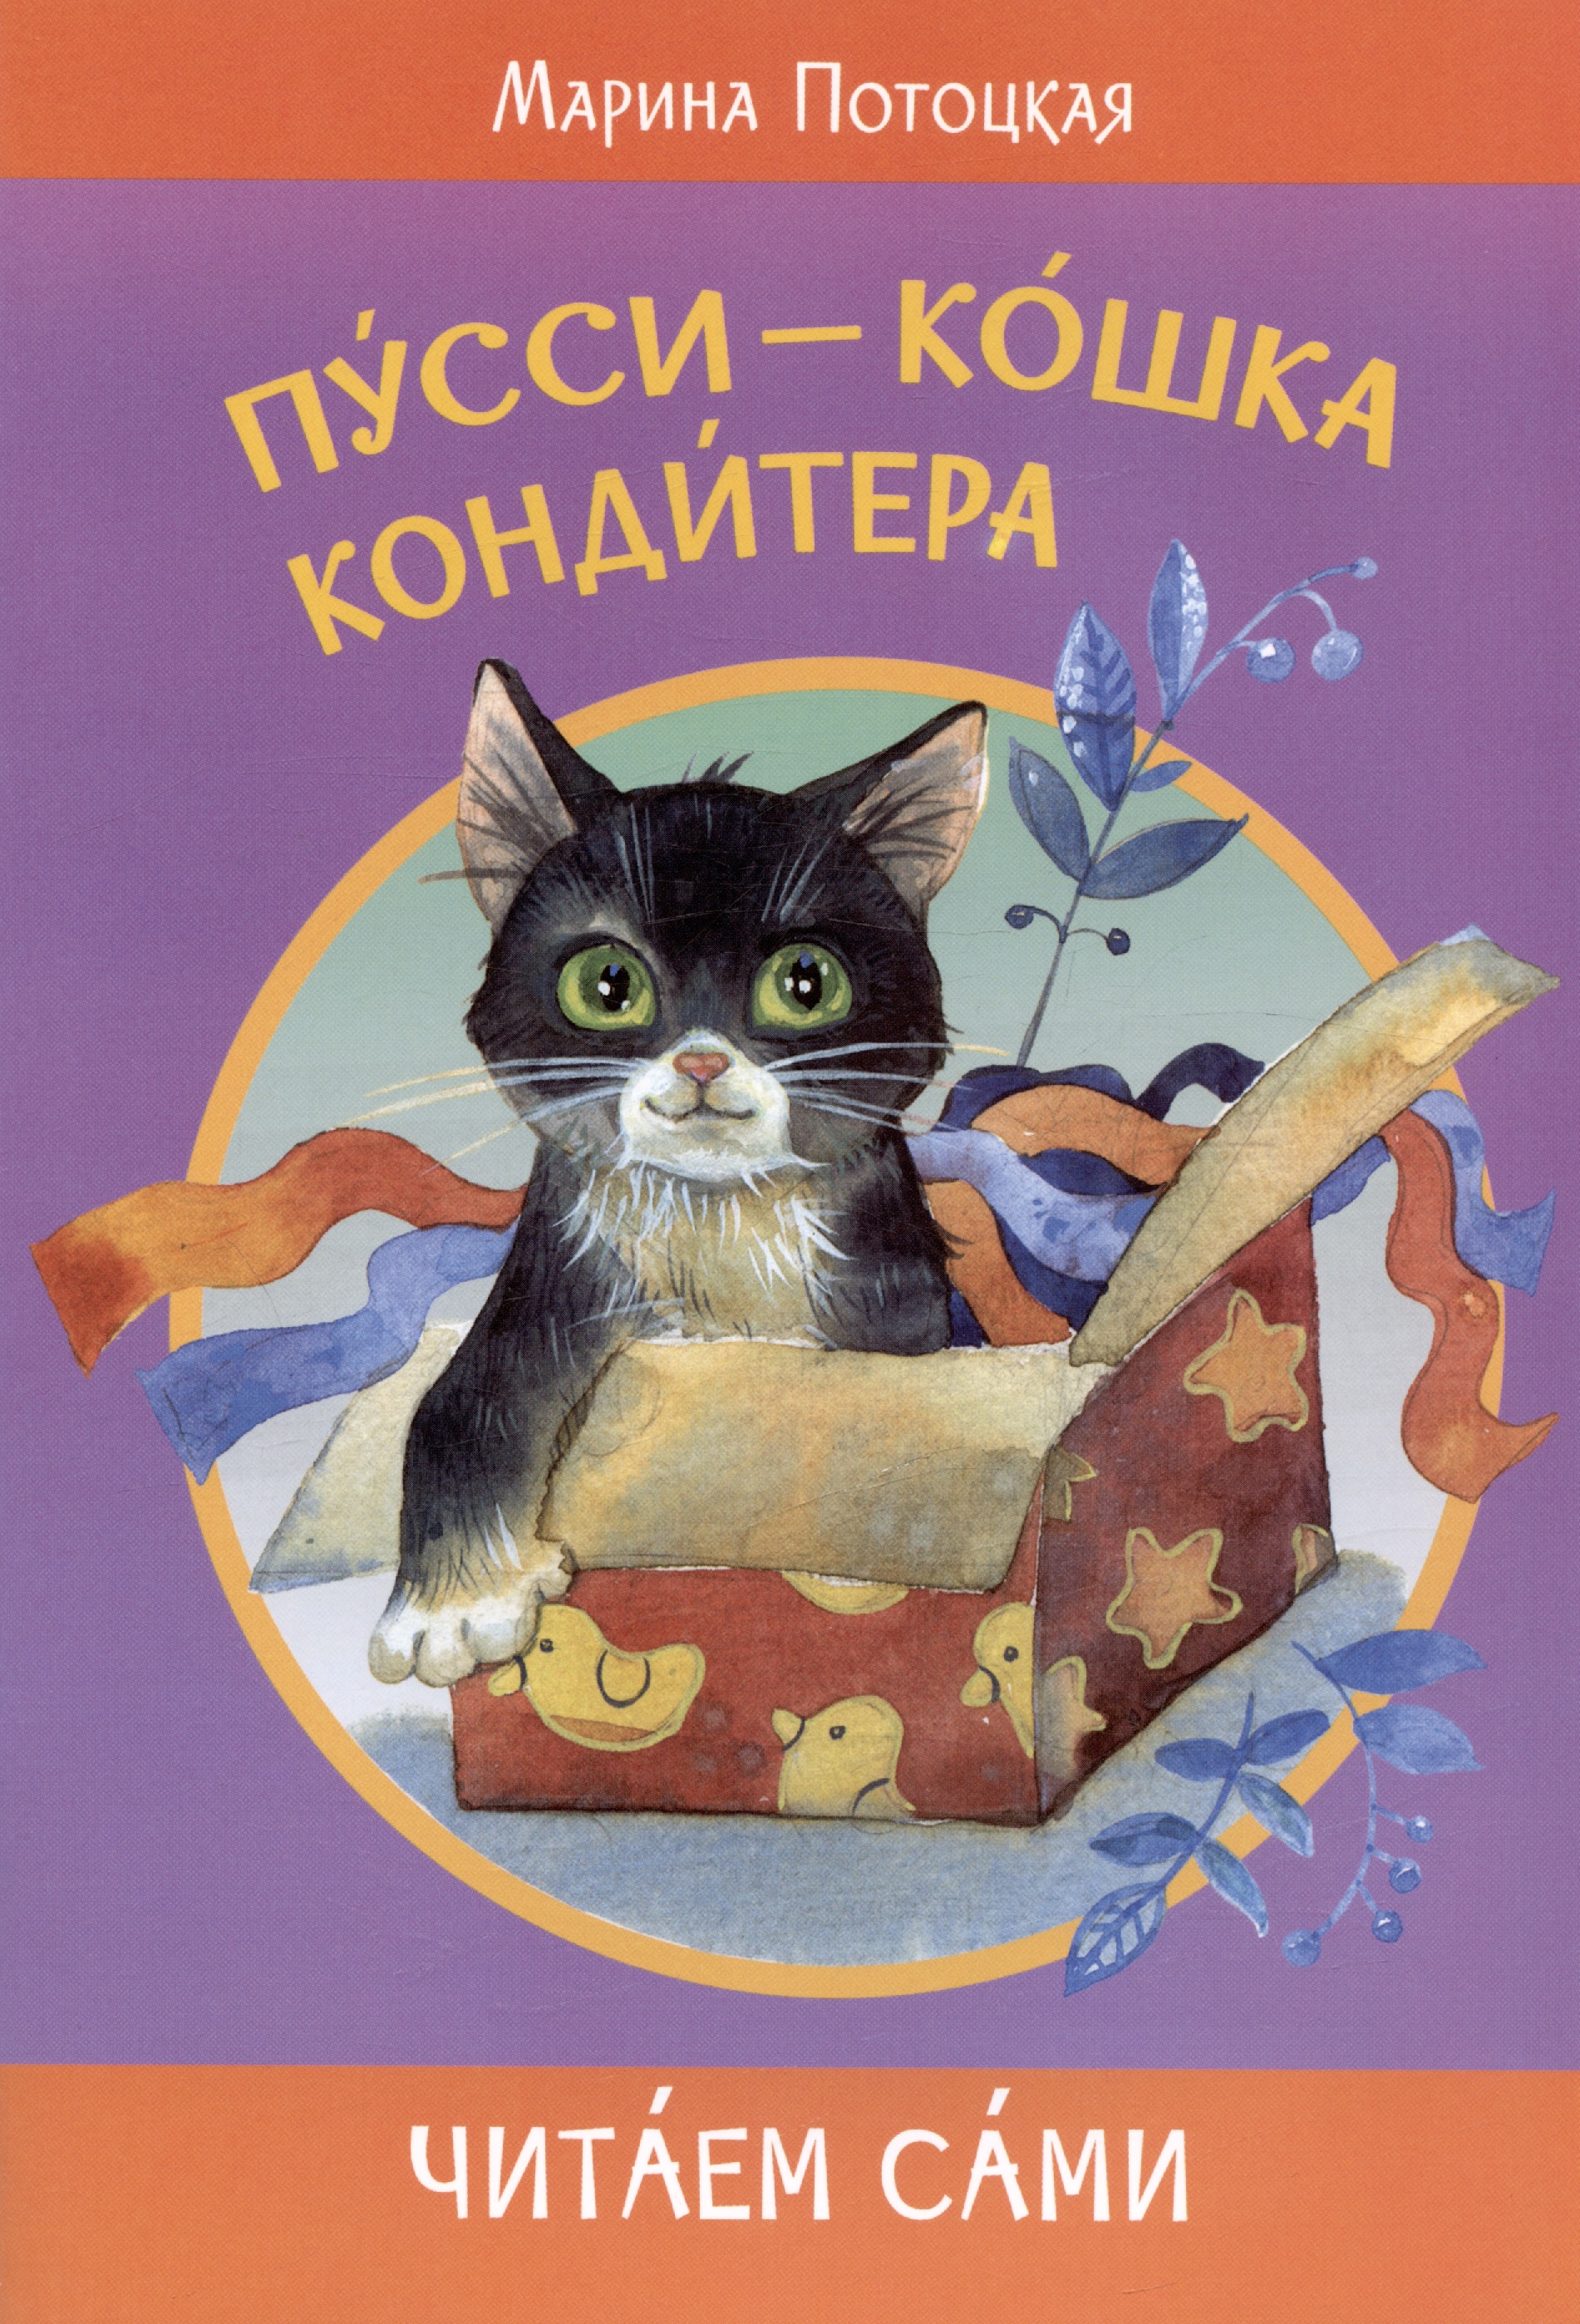 Потоцкая Марина Марковна Пусси-кошка кондитера